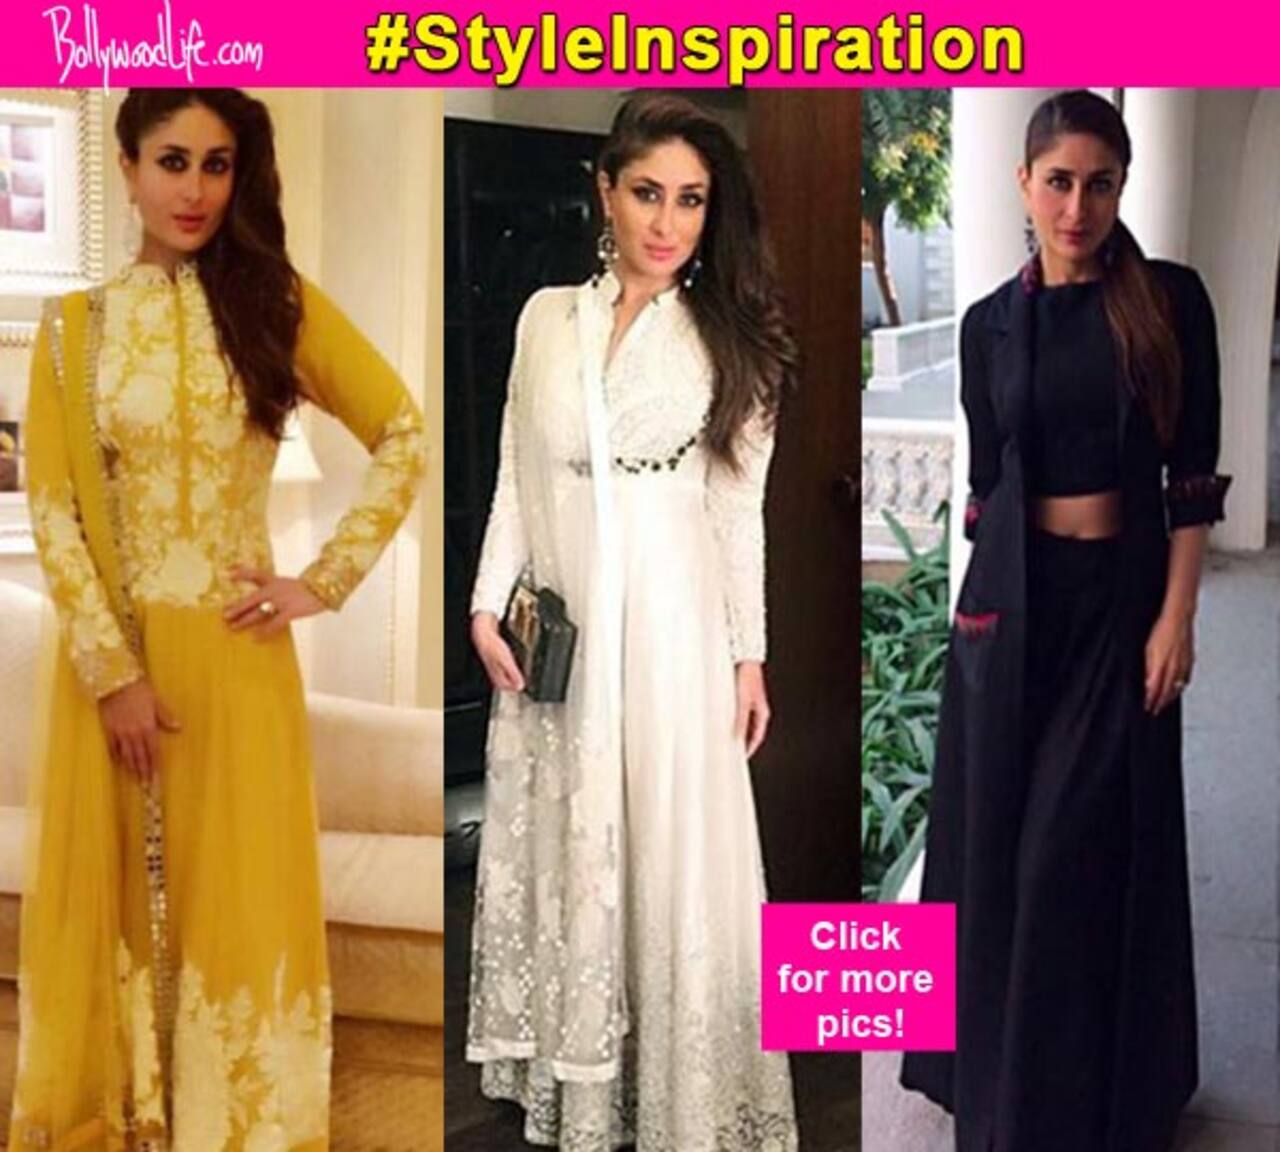 Kareena Kapoor Khan turns fashion guru for this wedding season - check out pics!